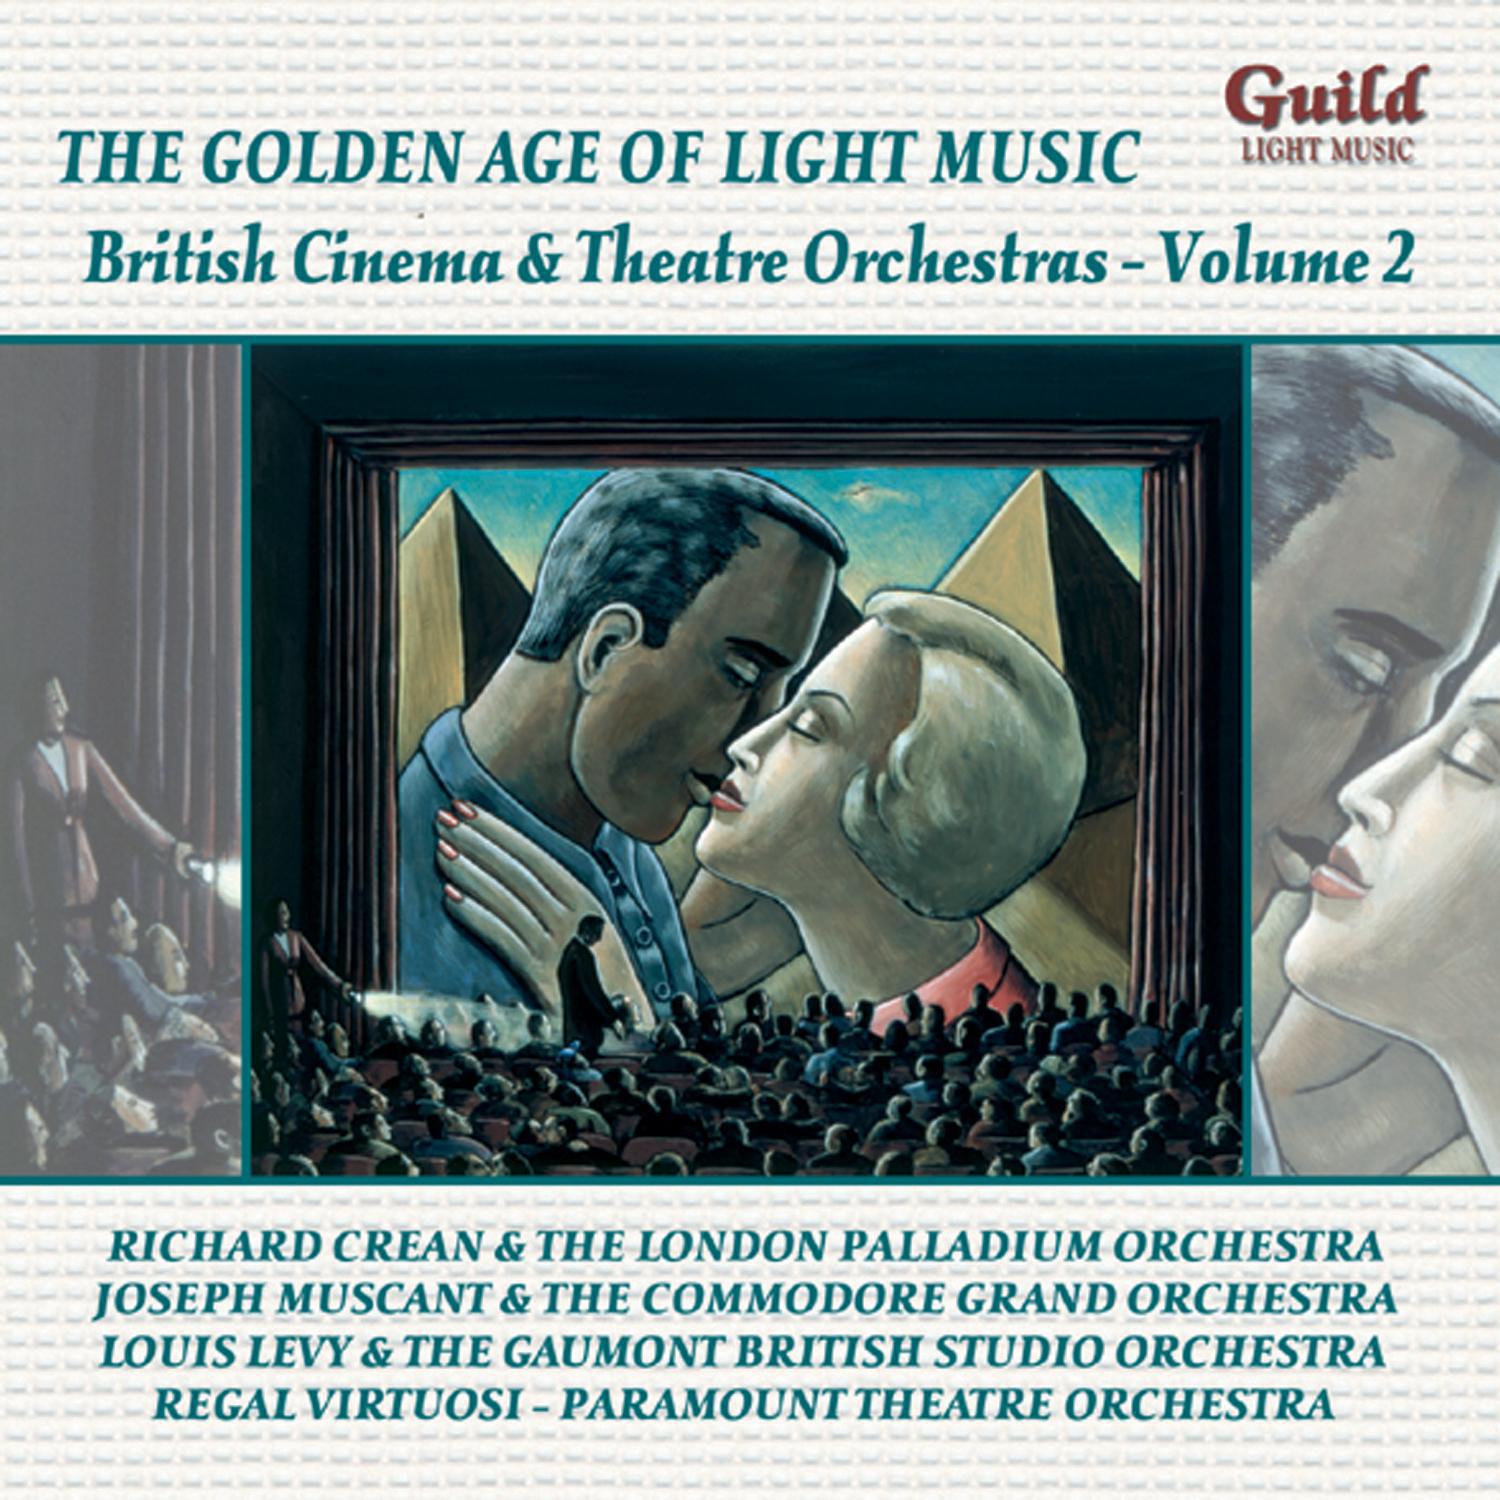 The Golden Age of Light Music: British Cinema & Theatre Orchestras - Volume 2